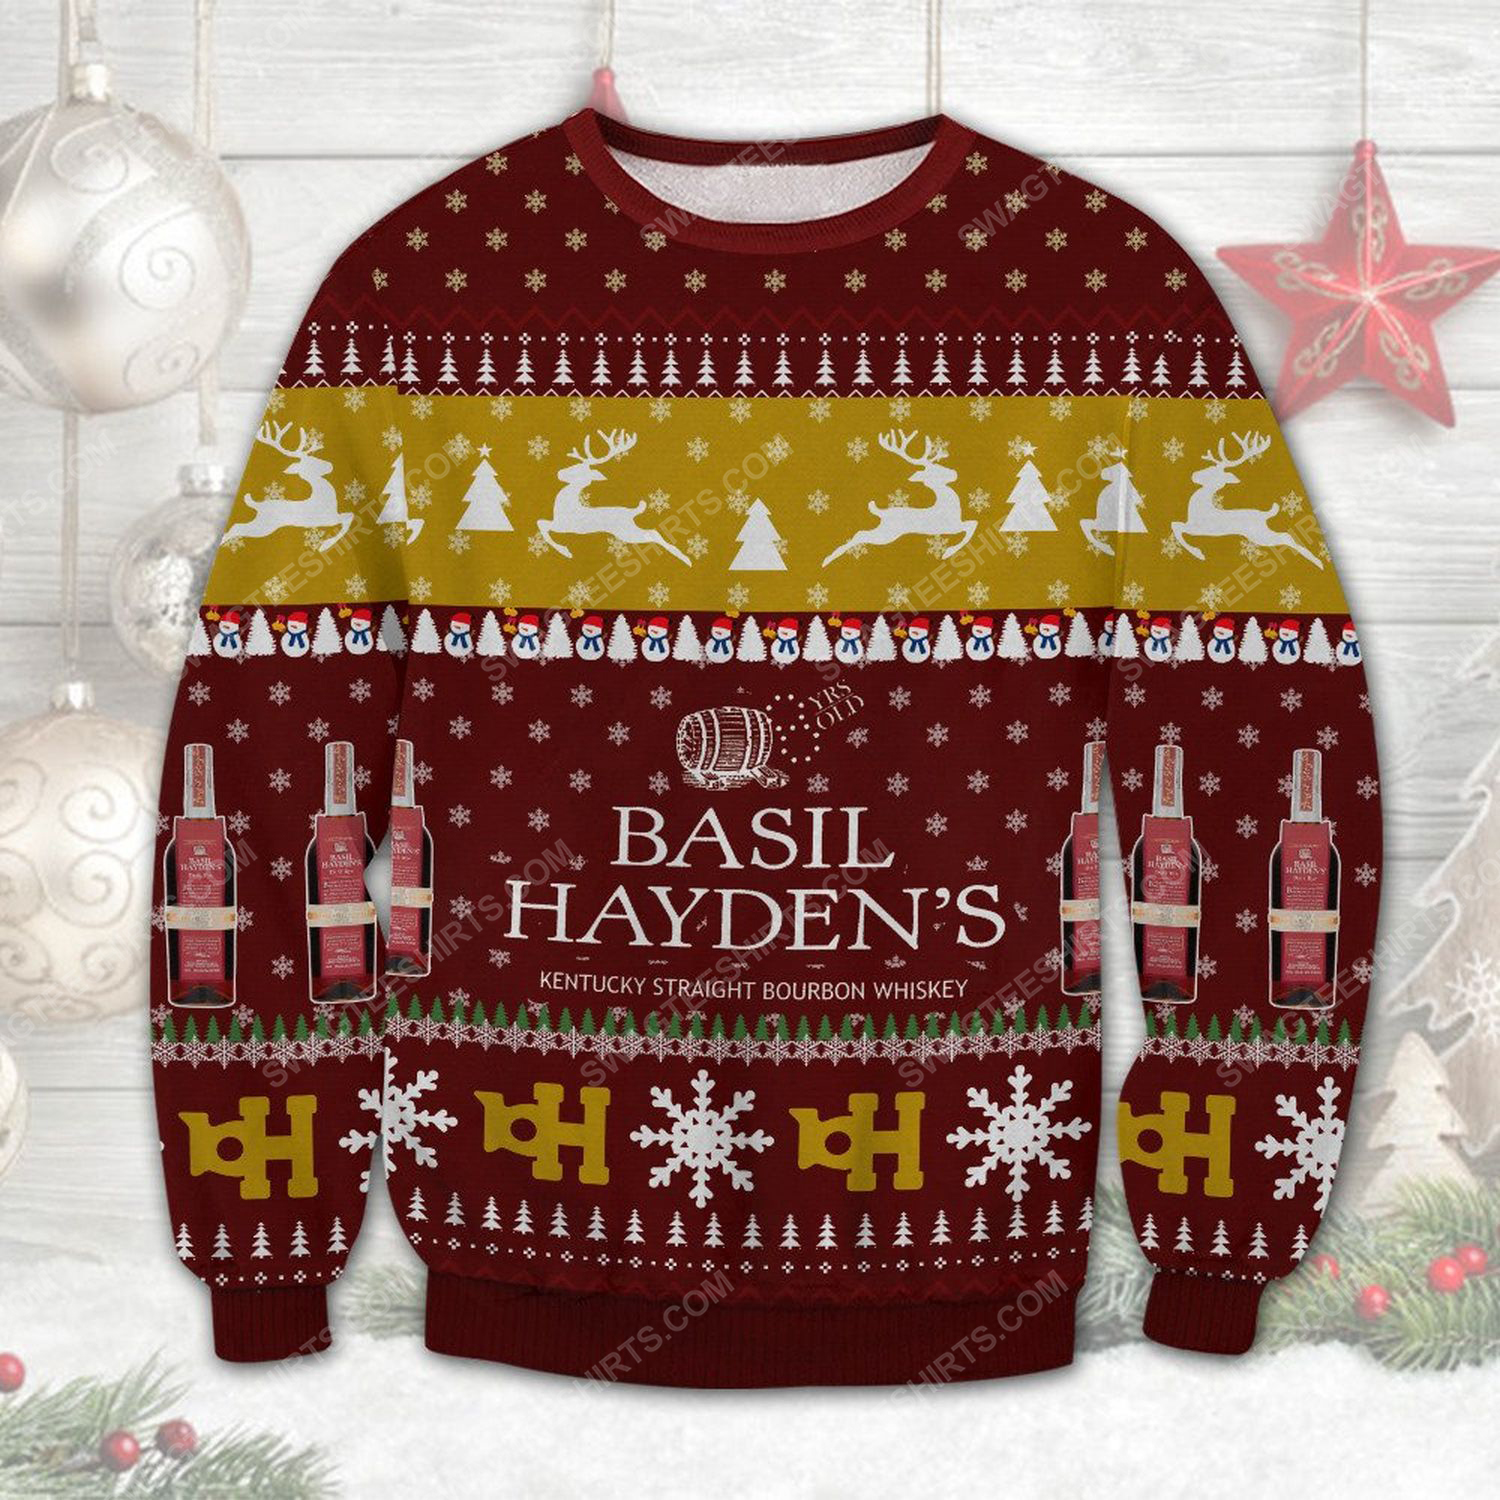 Basil hayden's kentucky straight bourbon whiskey ugly christmas sweater 1 - Copy (2)